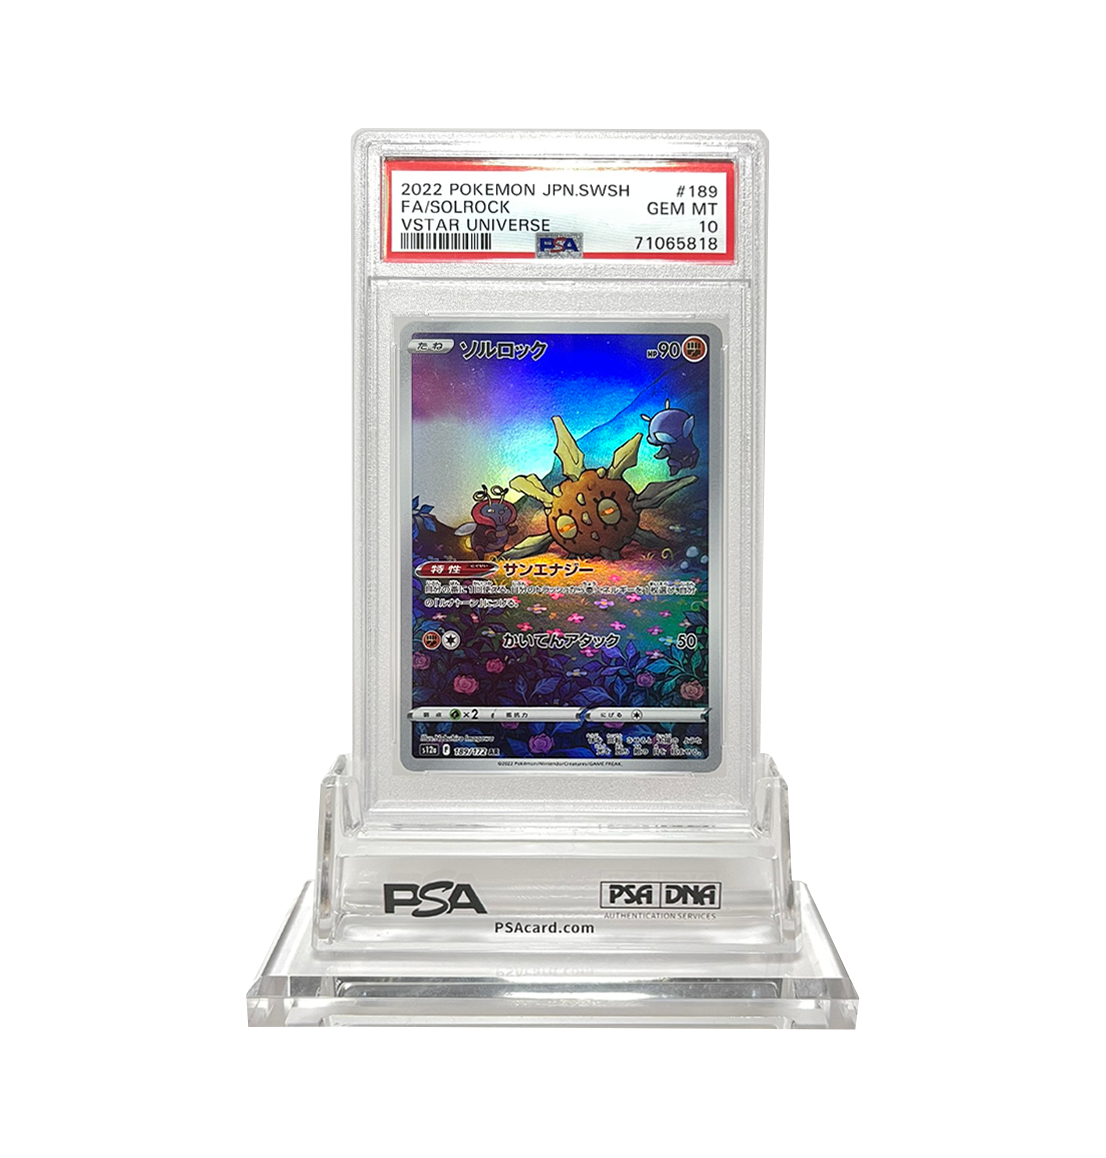 PSA 10 Solrock 189 Vstar Universe Japanese Pokemon card